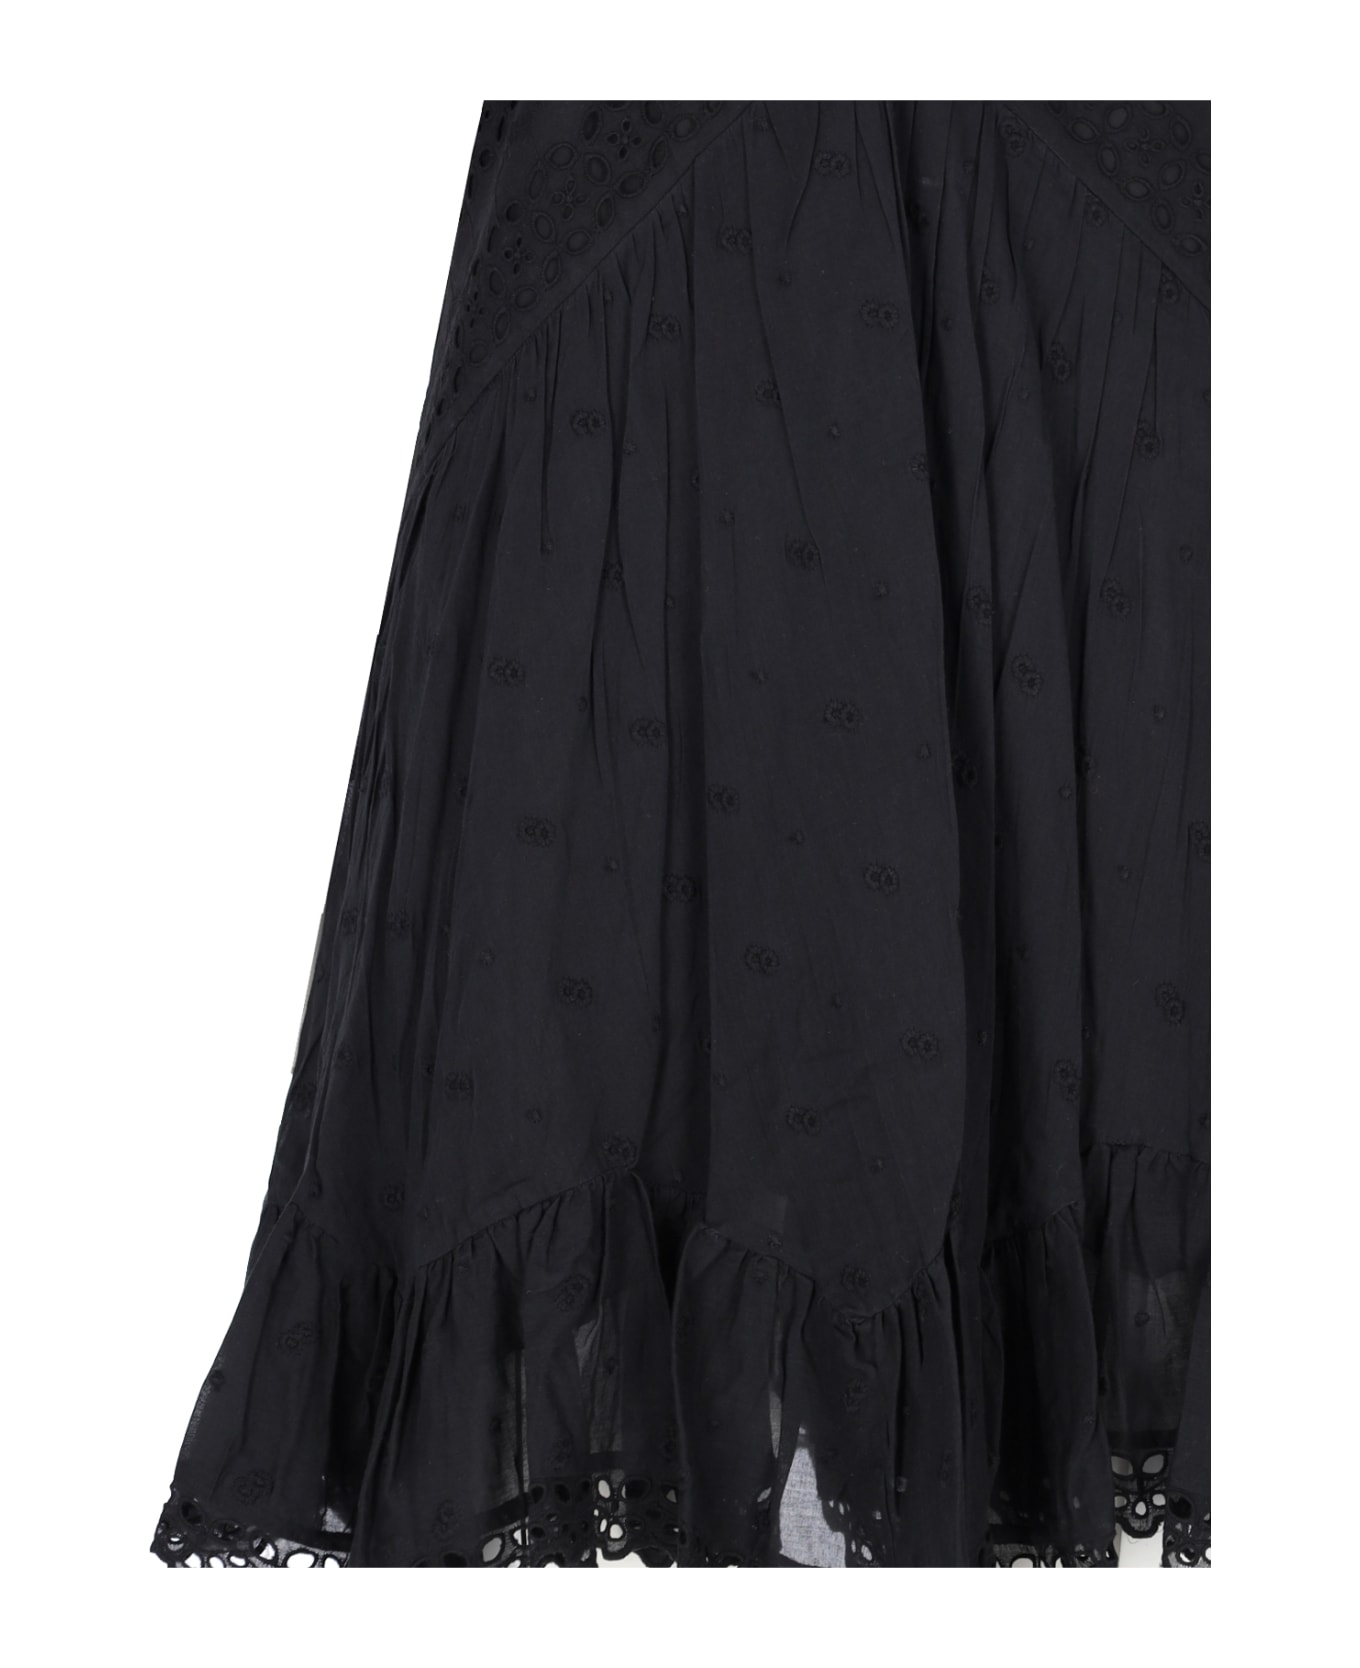 Marant Étoile Slayae Dress - Black